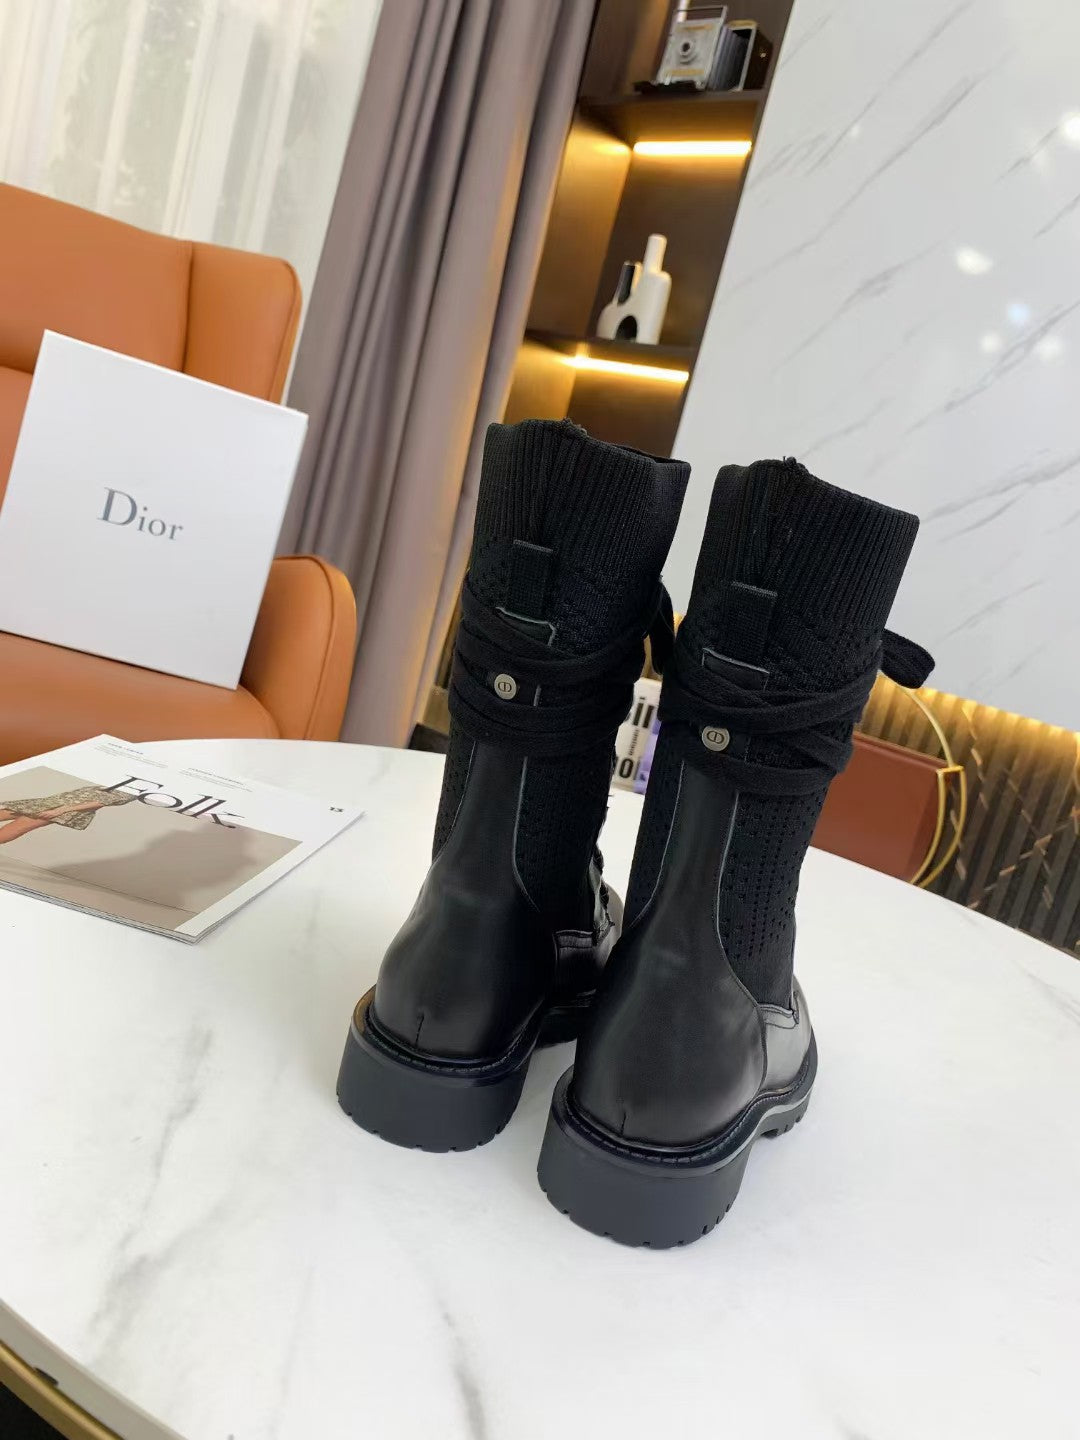 Christian Dior Women Fashion Boots Shoes 34